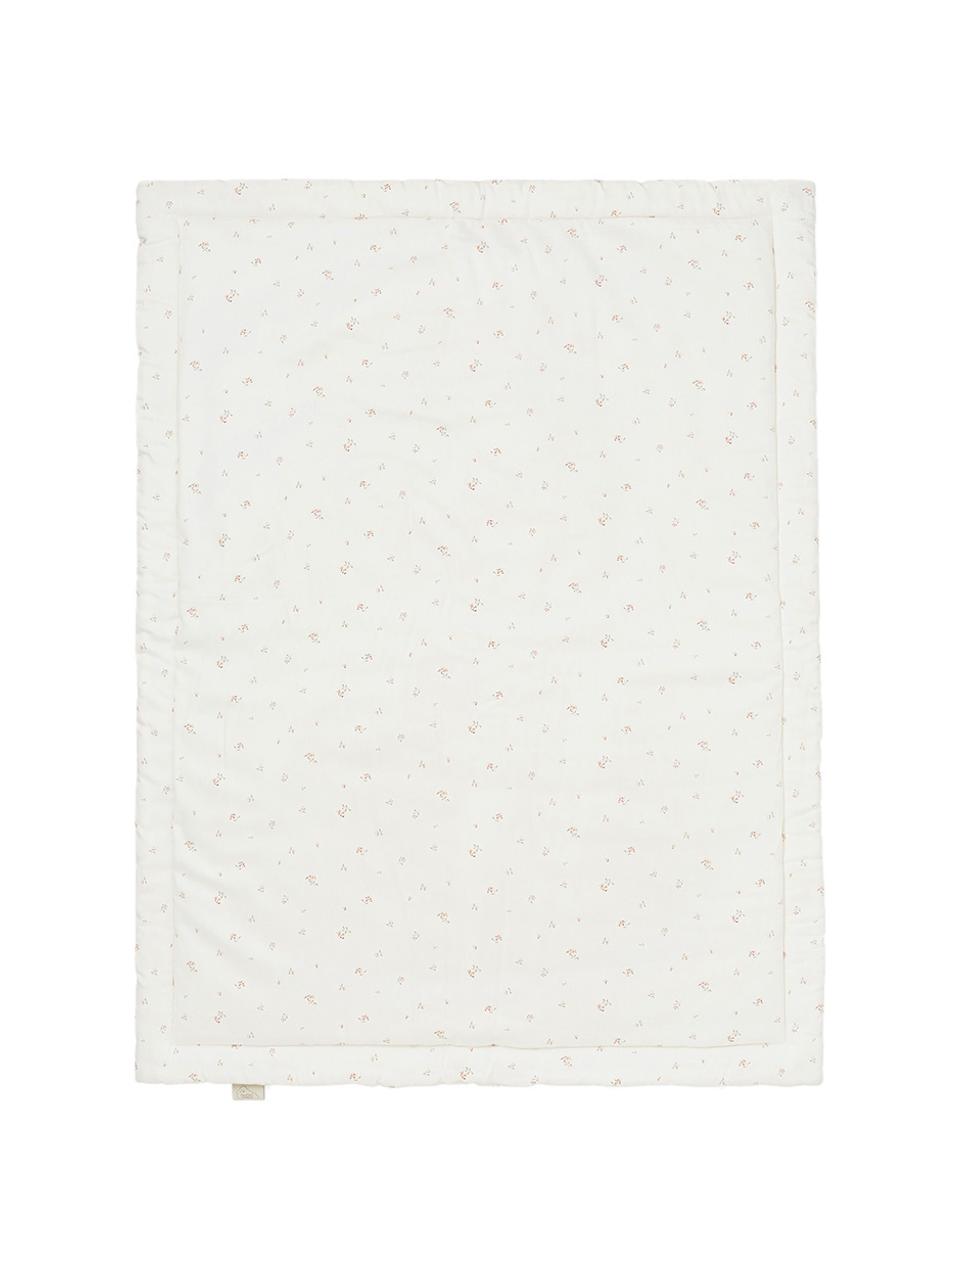 Manta de algodón ecológico Poppies, Funda: 100% algodón ecológico co, Blanco, rosa, An 90 x L 120 cm